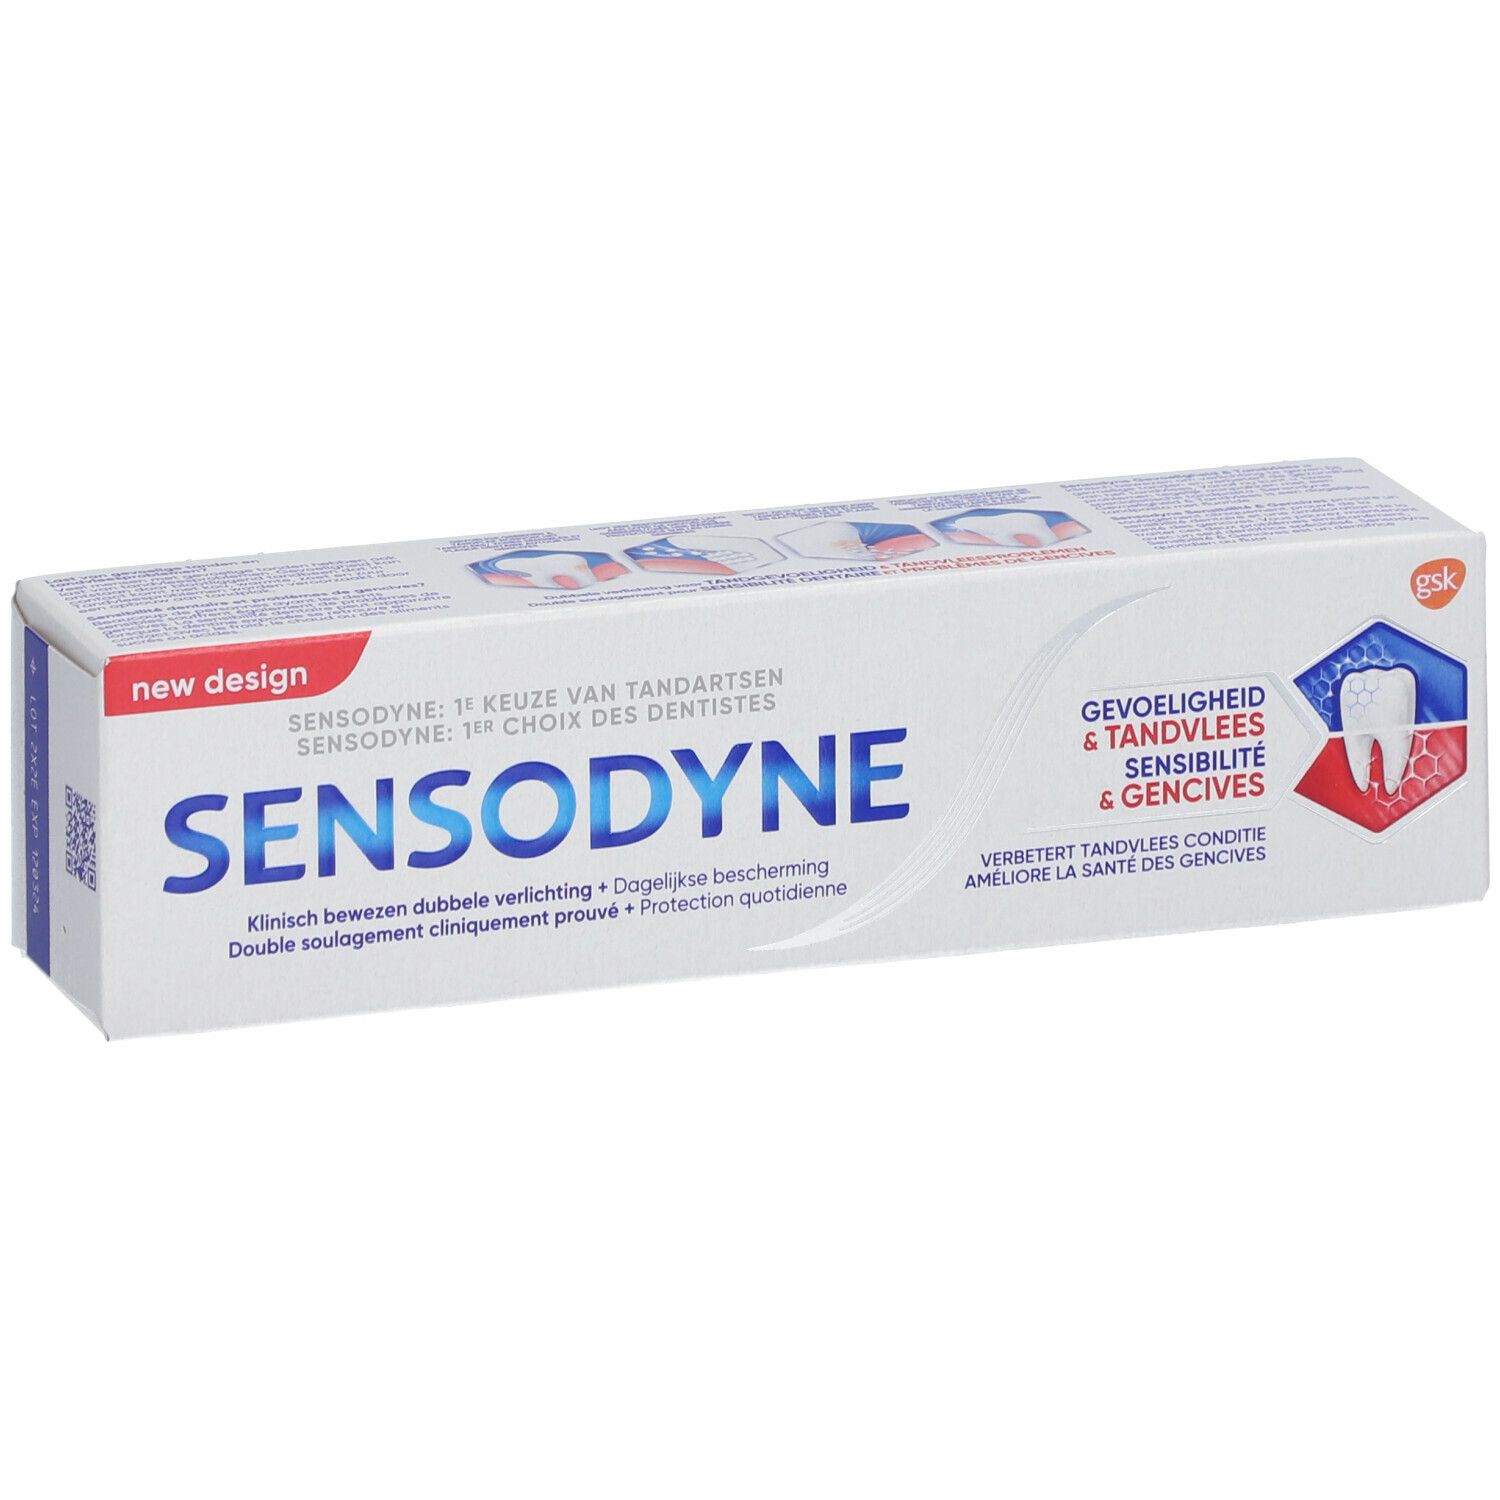 SENSODYNE® Sensibilité & Gencives Dentifrice